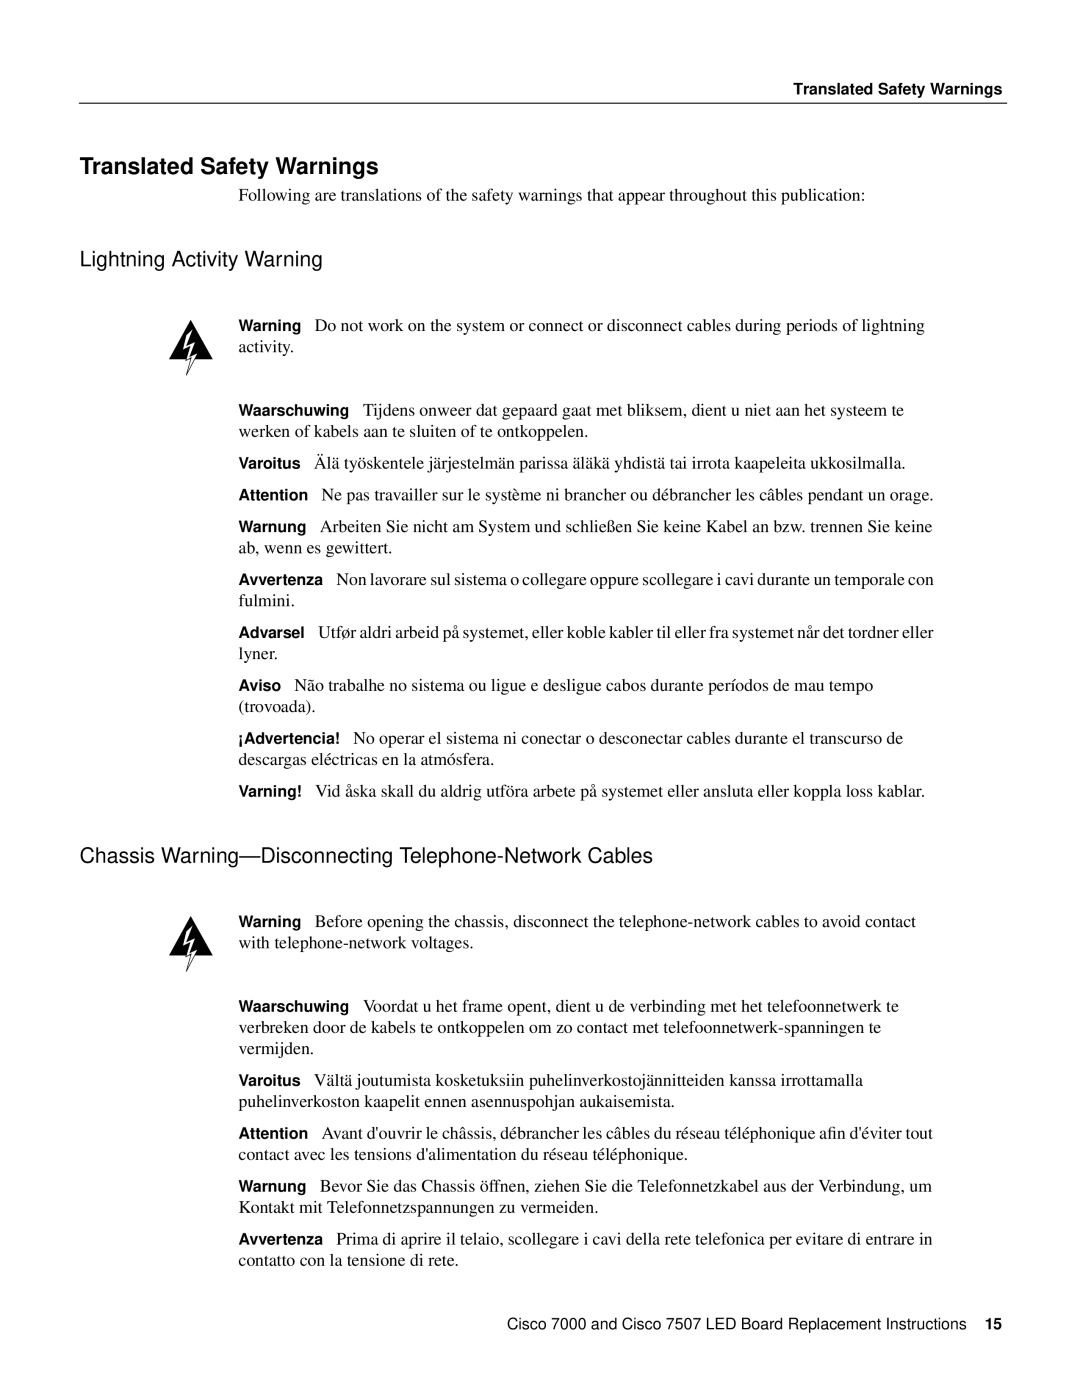 Cisco Systems MAS-7KLED manual Translated Safety Warnings, Lightning Activity Warning 